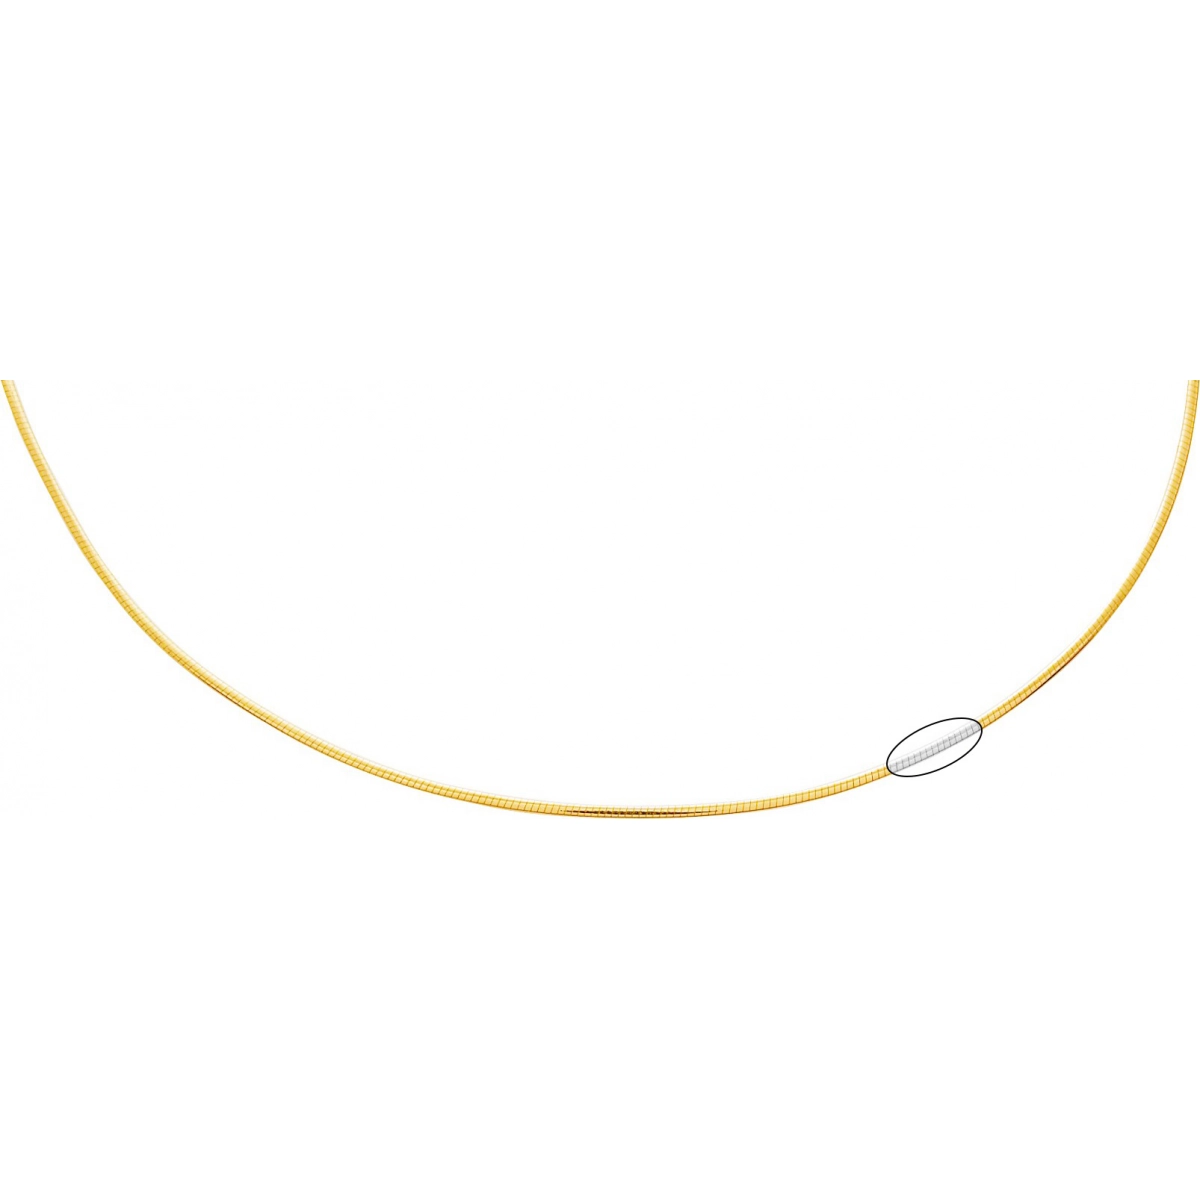 Necklace chain 'Avvolto' reversible 18K 2TG Lua Blanca  2263.2.42